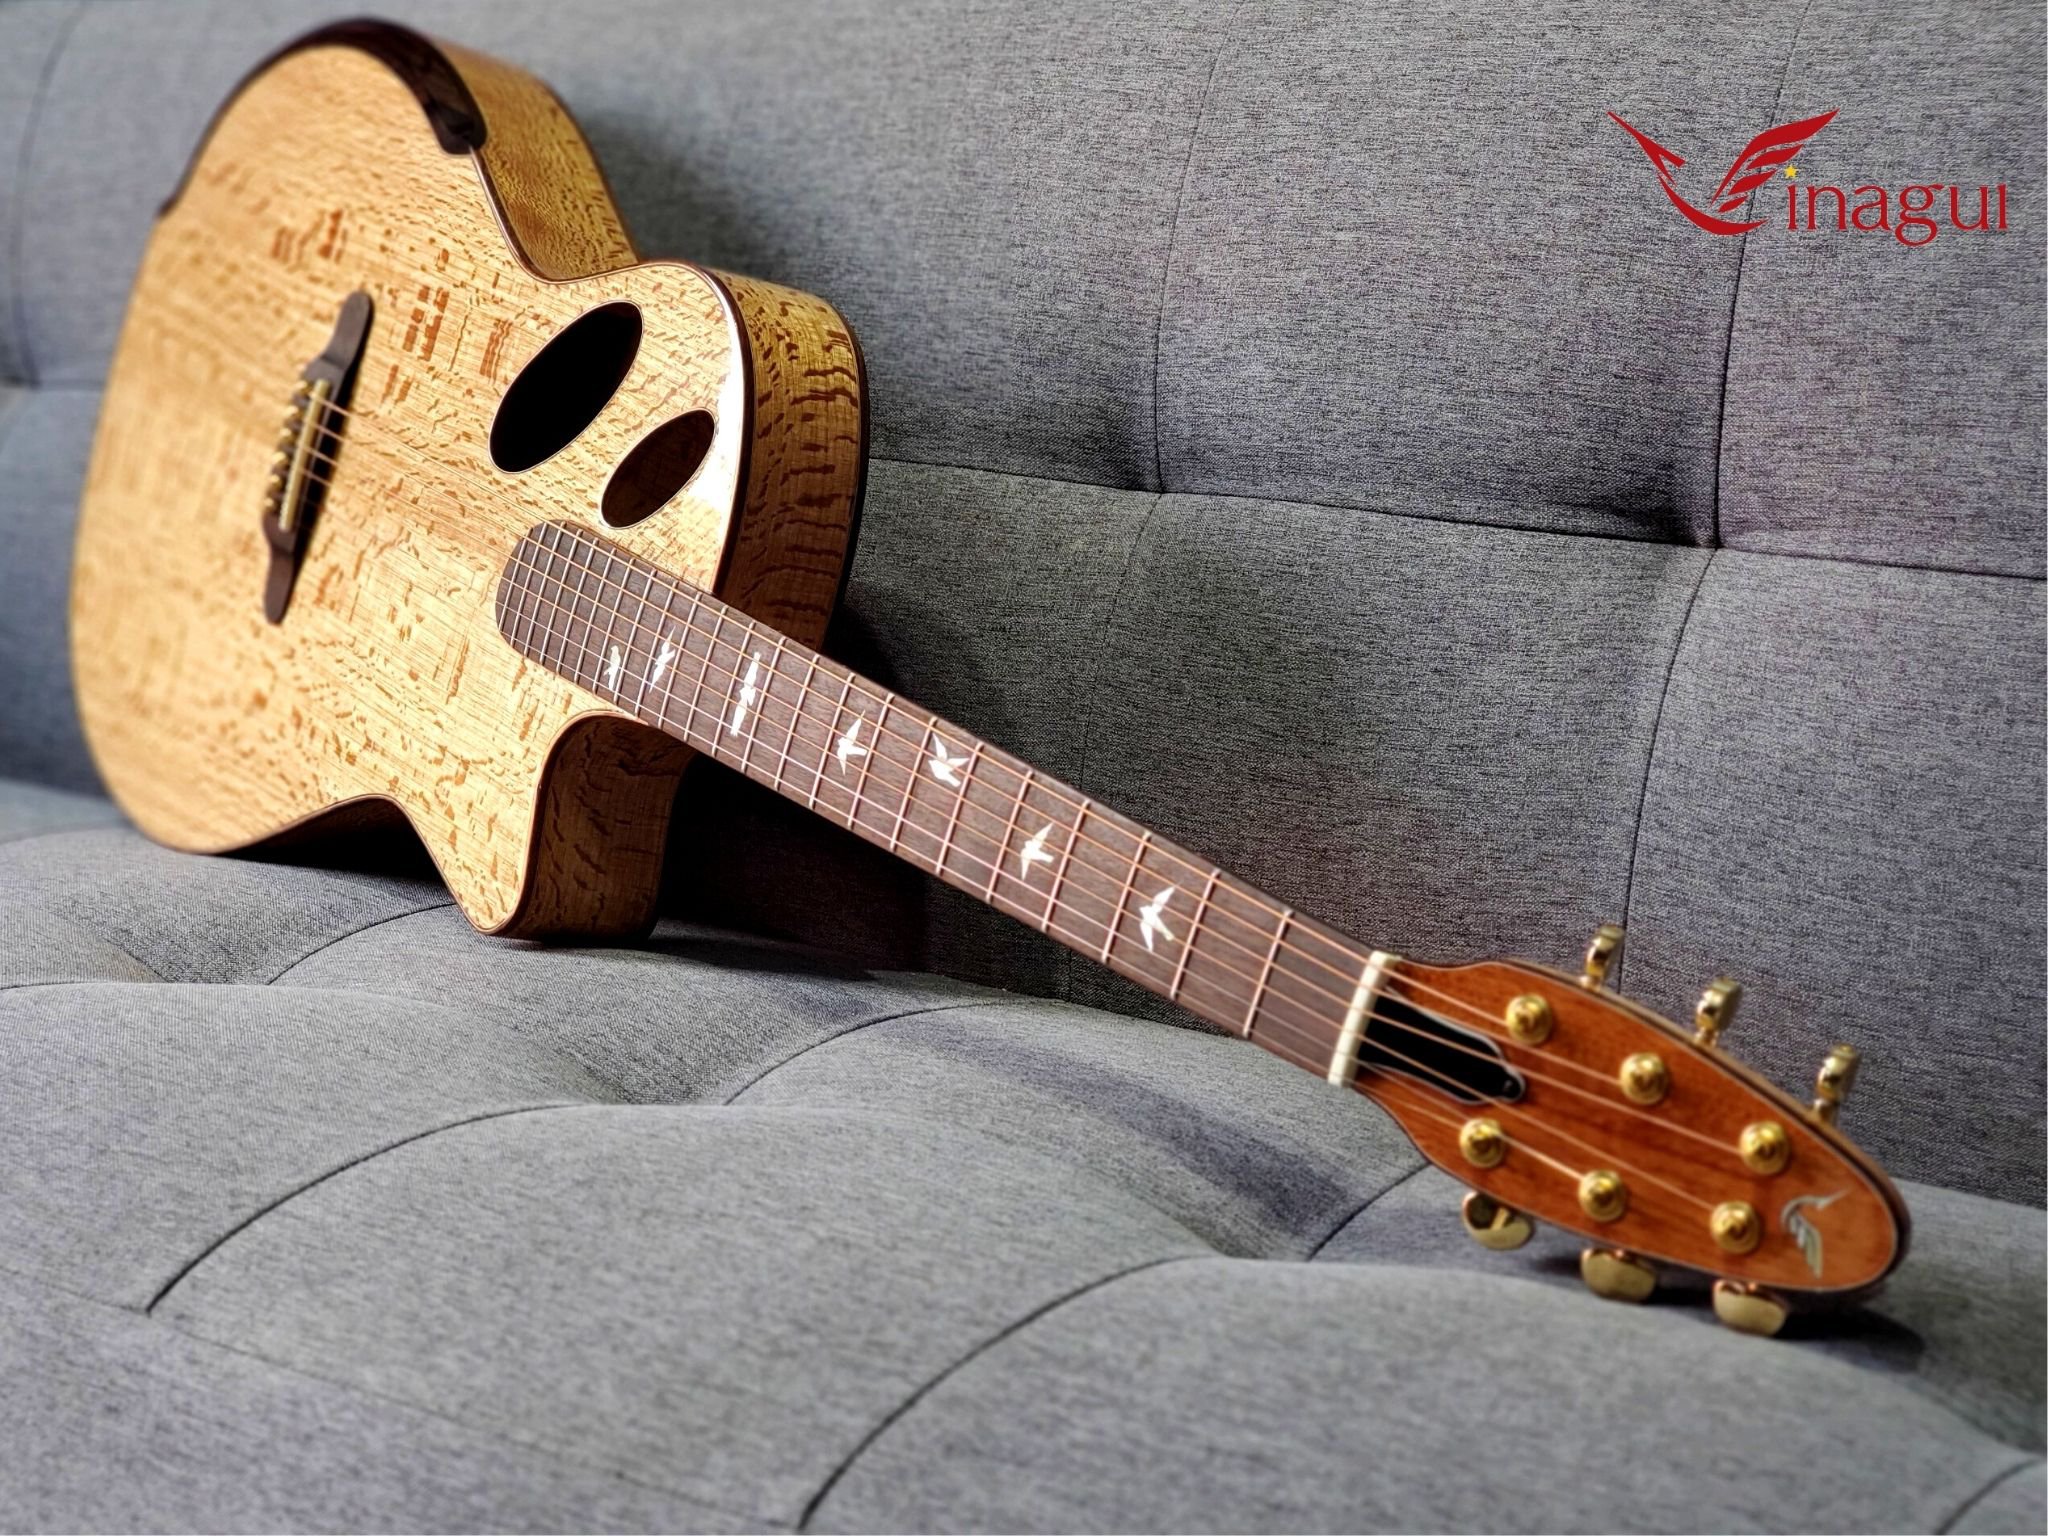 Đàn Guitar Gỗ Sồi Custom Cao Cấp Vinagui VF01